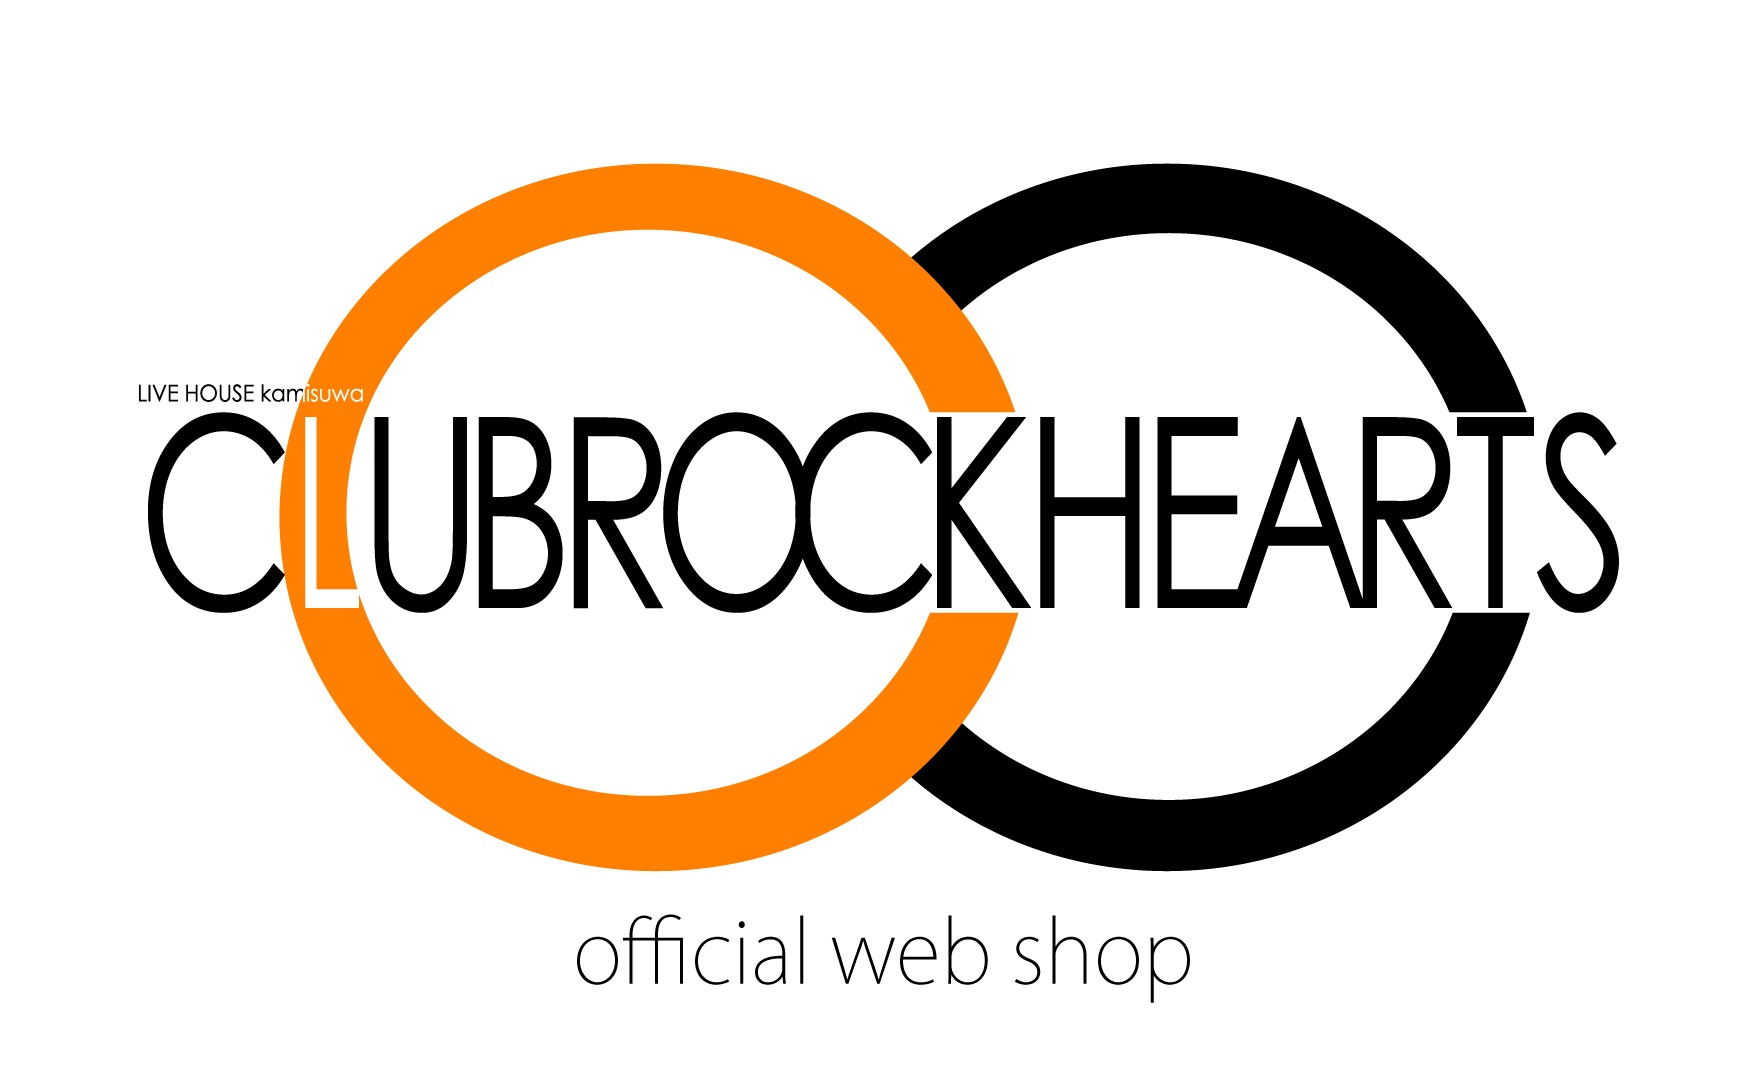 CLUBROCKHEARTS official webshop